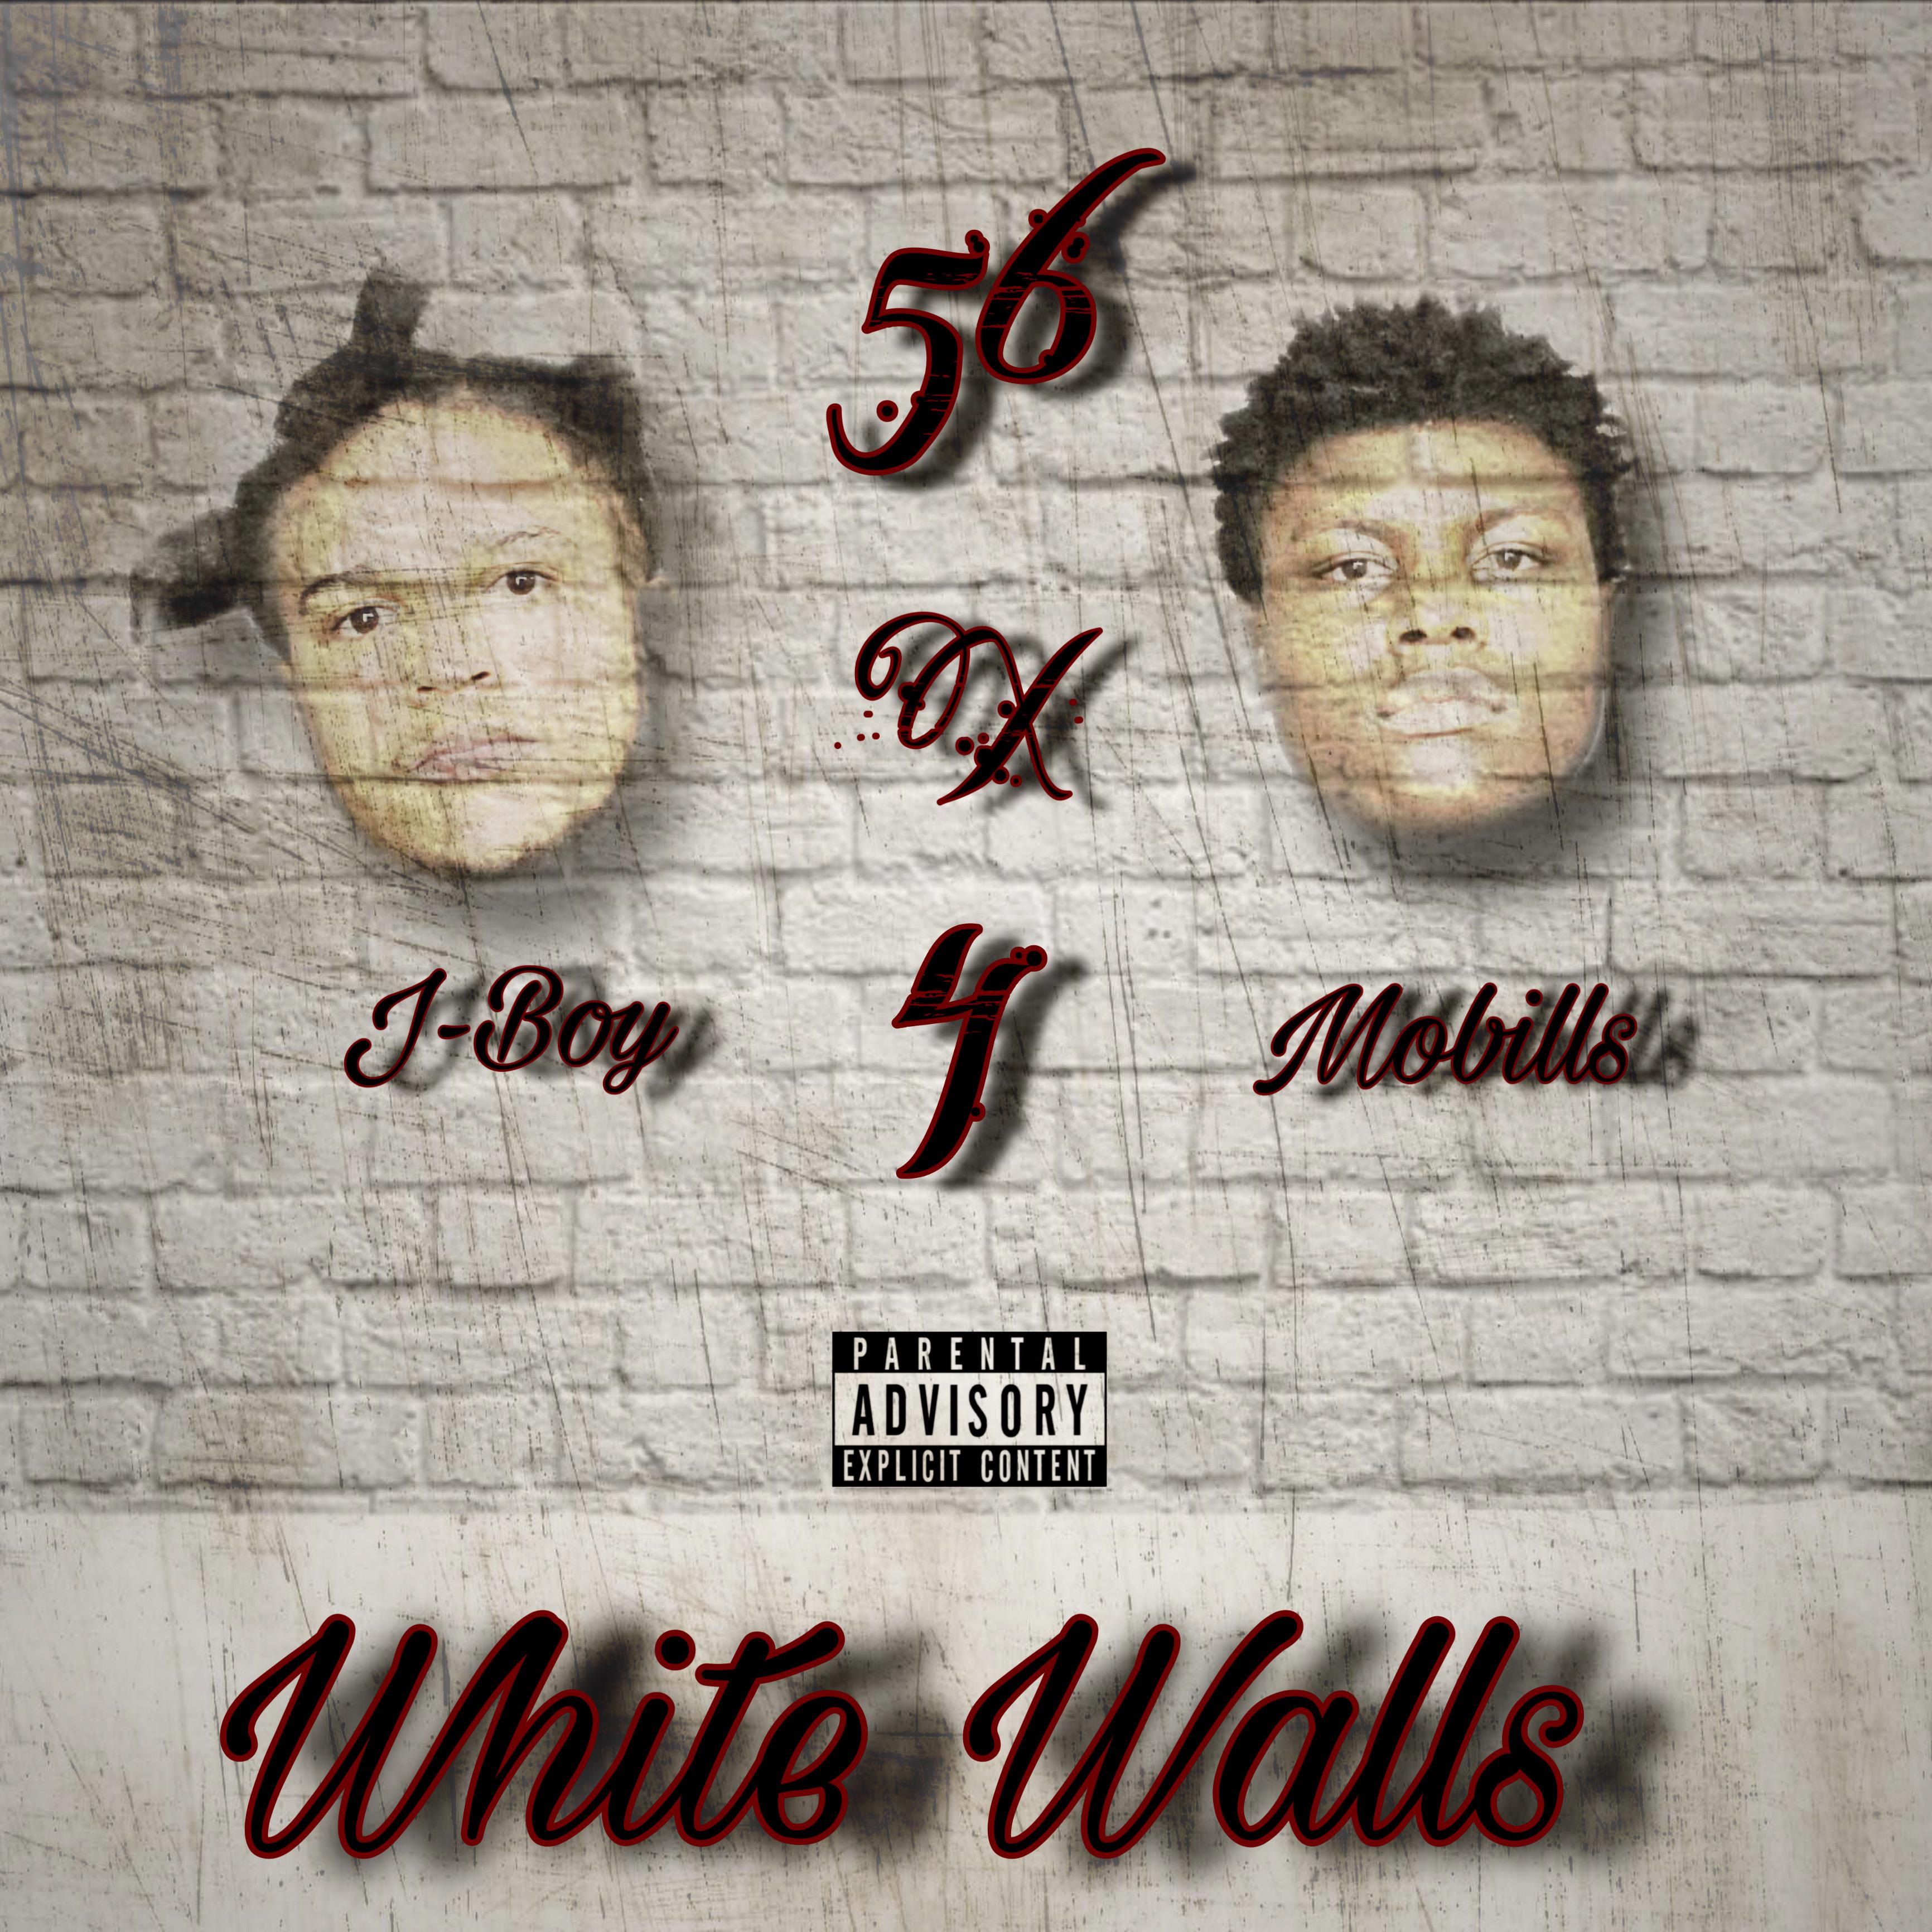 Mobills - White Walls